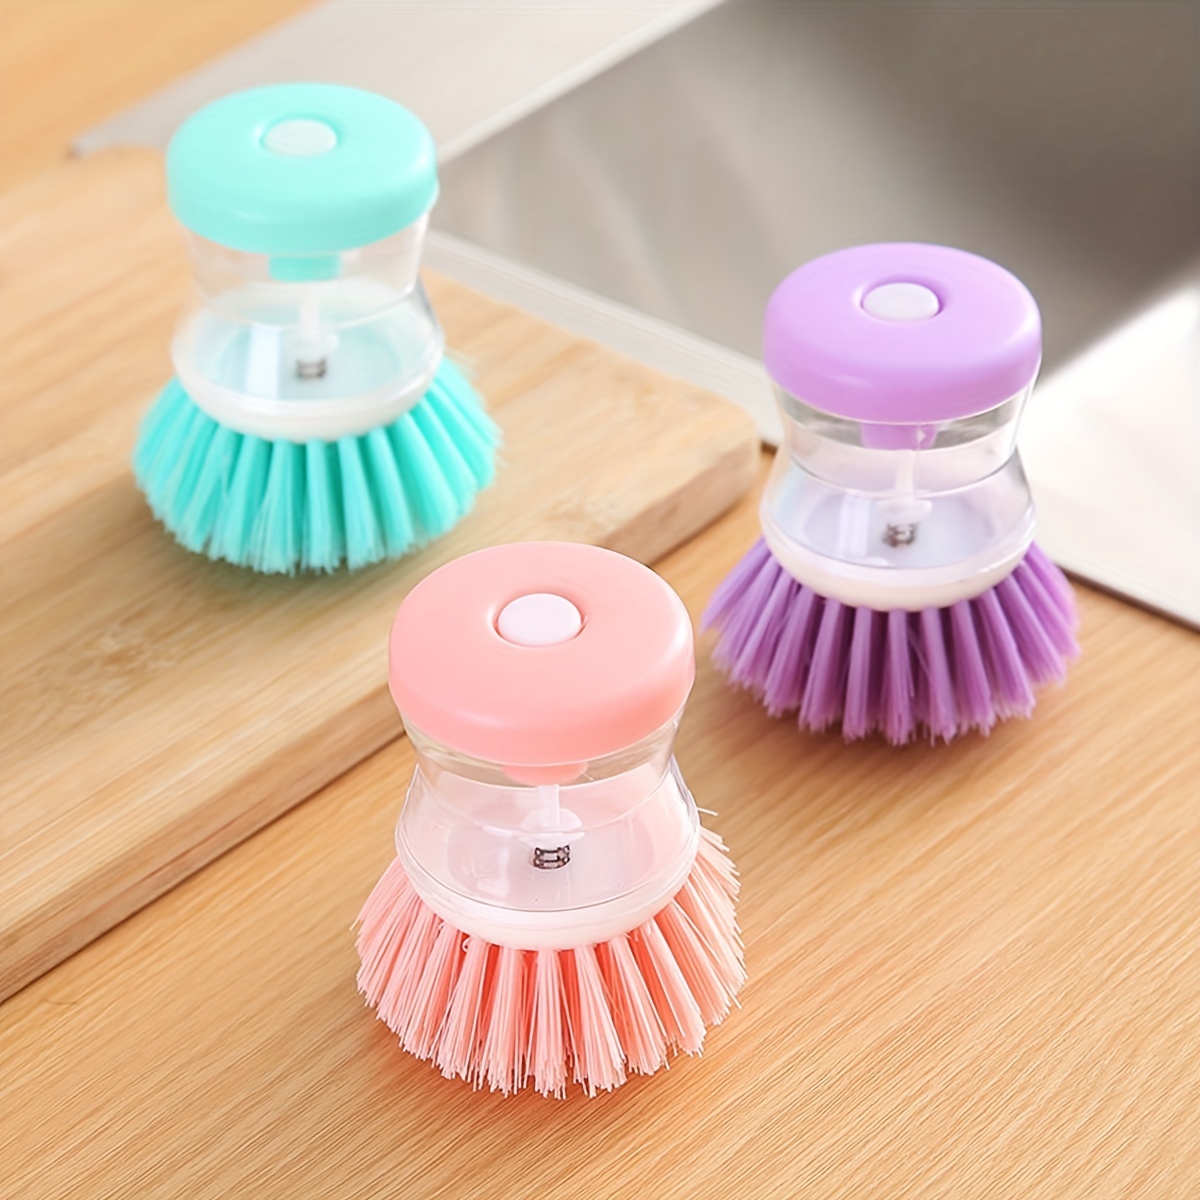 Ceramic Soap Dispenser Dish Brush: Perfect For Dishes, Pots, Pans